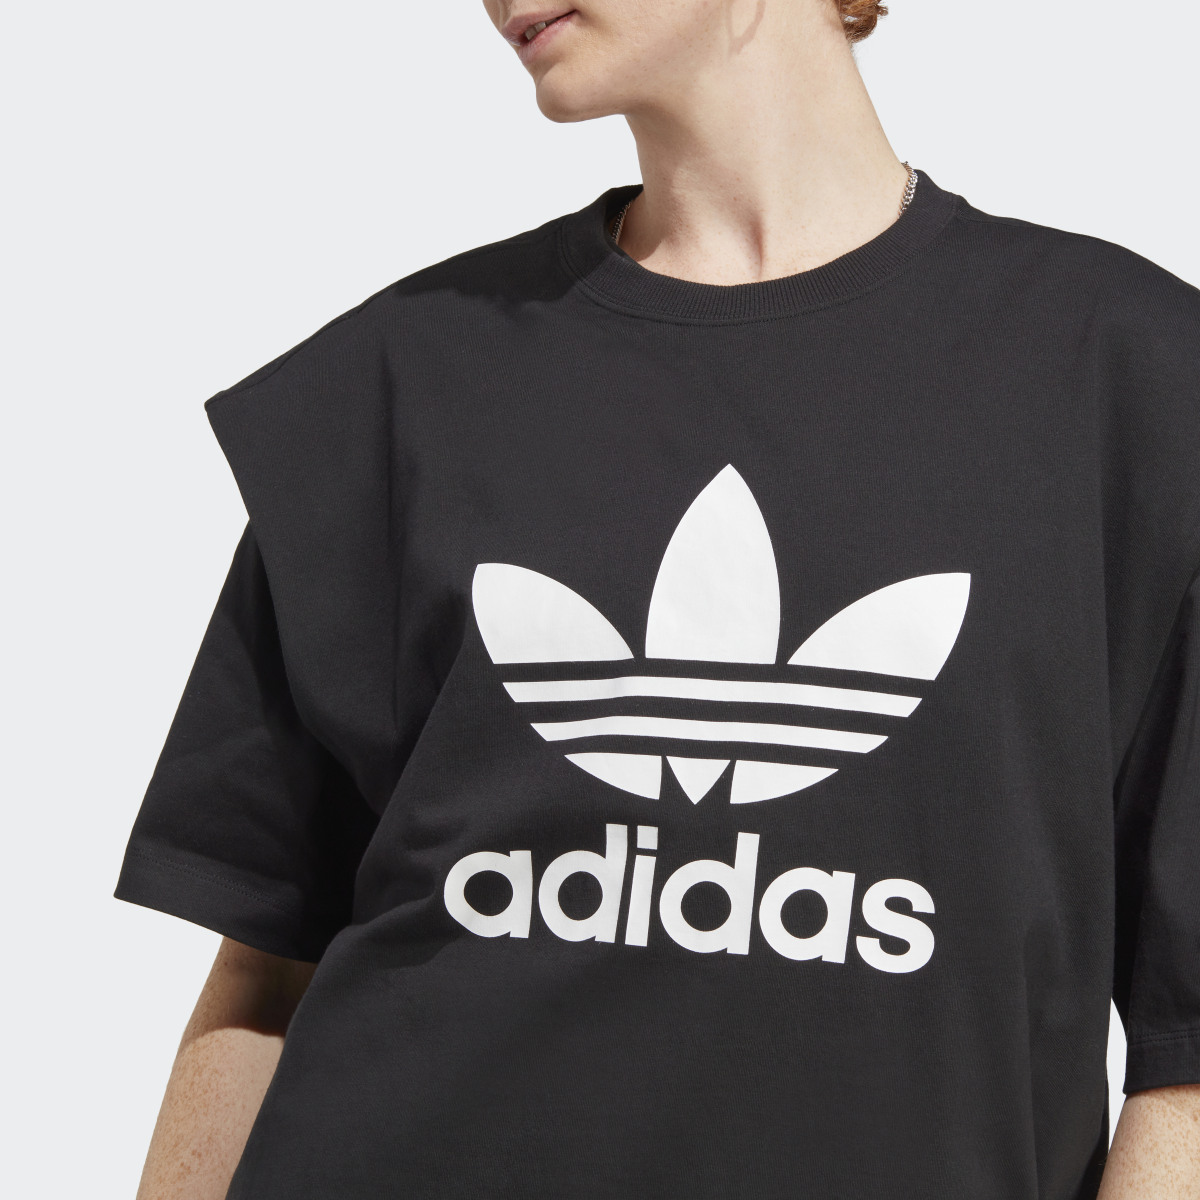 Adidas Always Original T-Shirt. 7